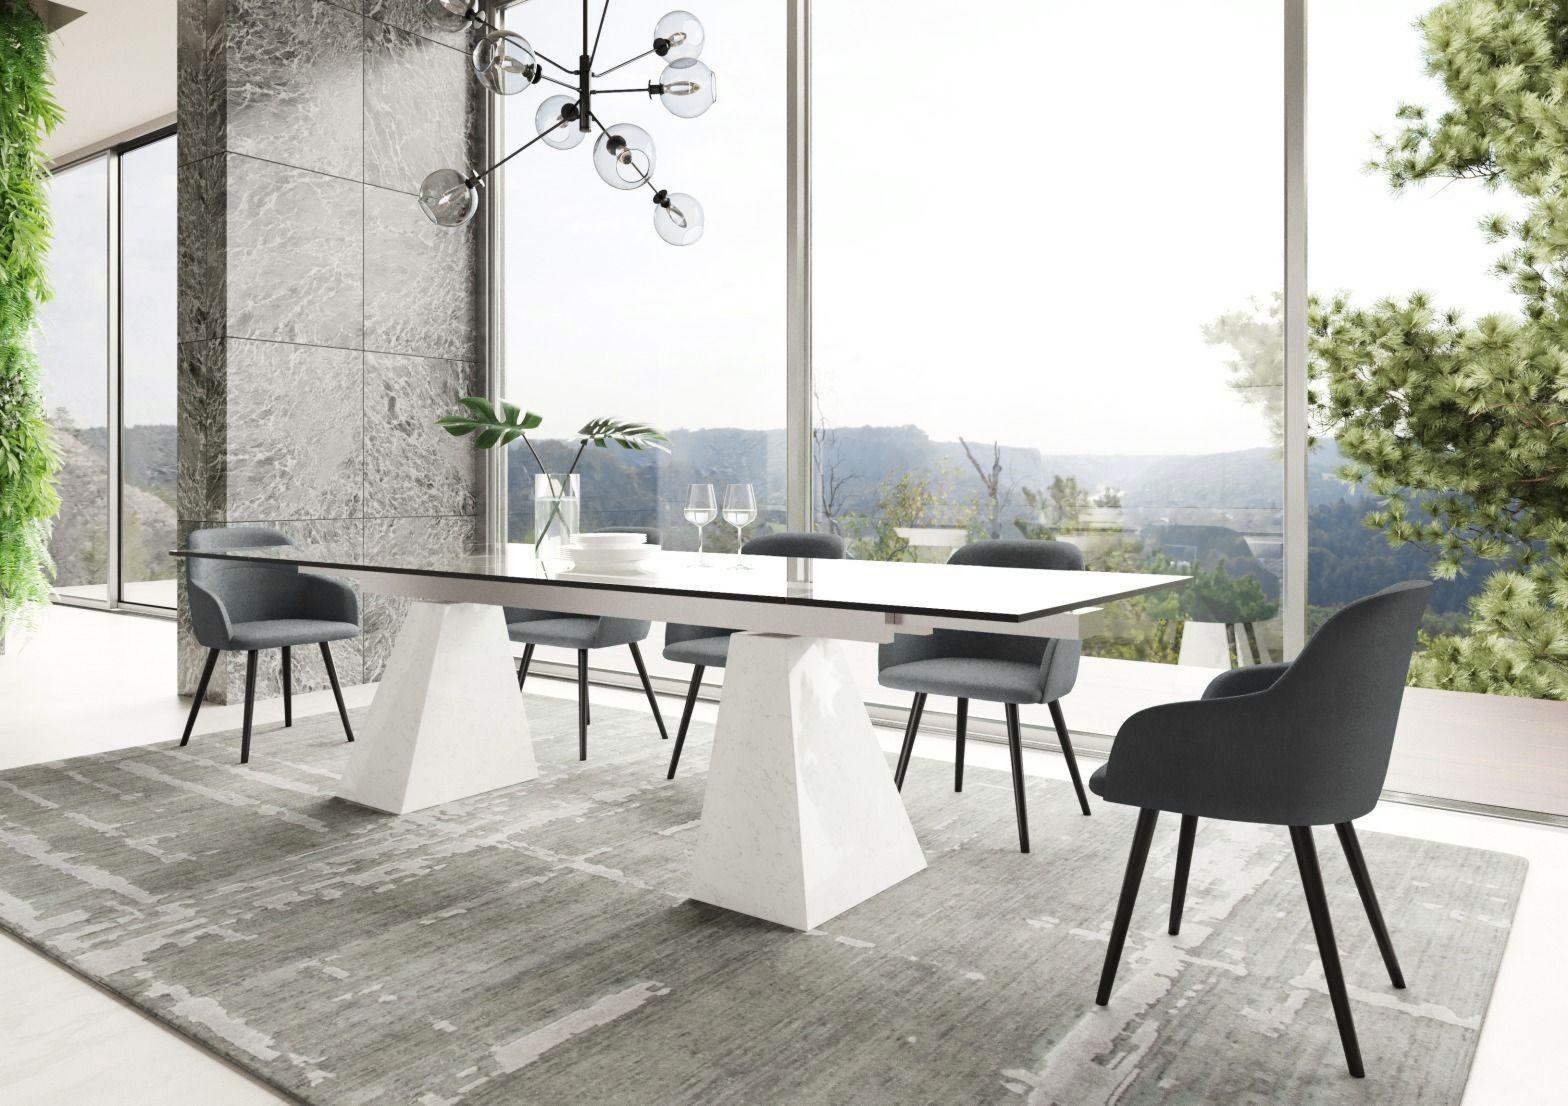 Contemporary, Modern Dining Room Set Latrobe Scranton VGYFDT8765-5-DT-WHT-9pcs in Glass Linen